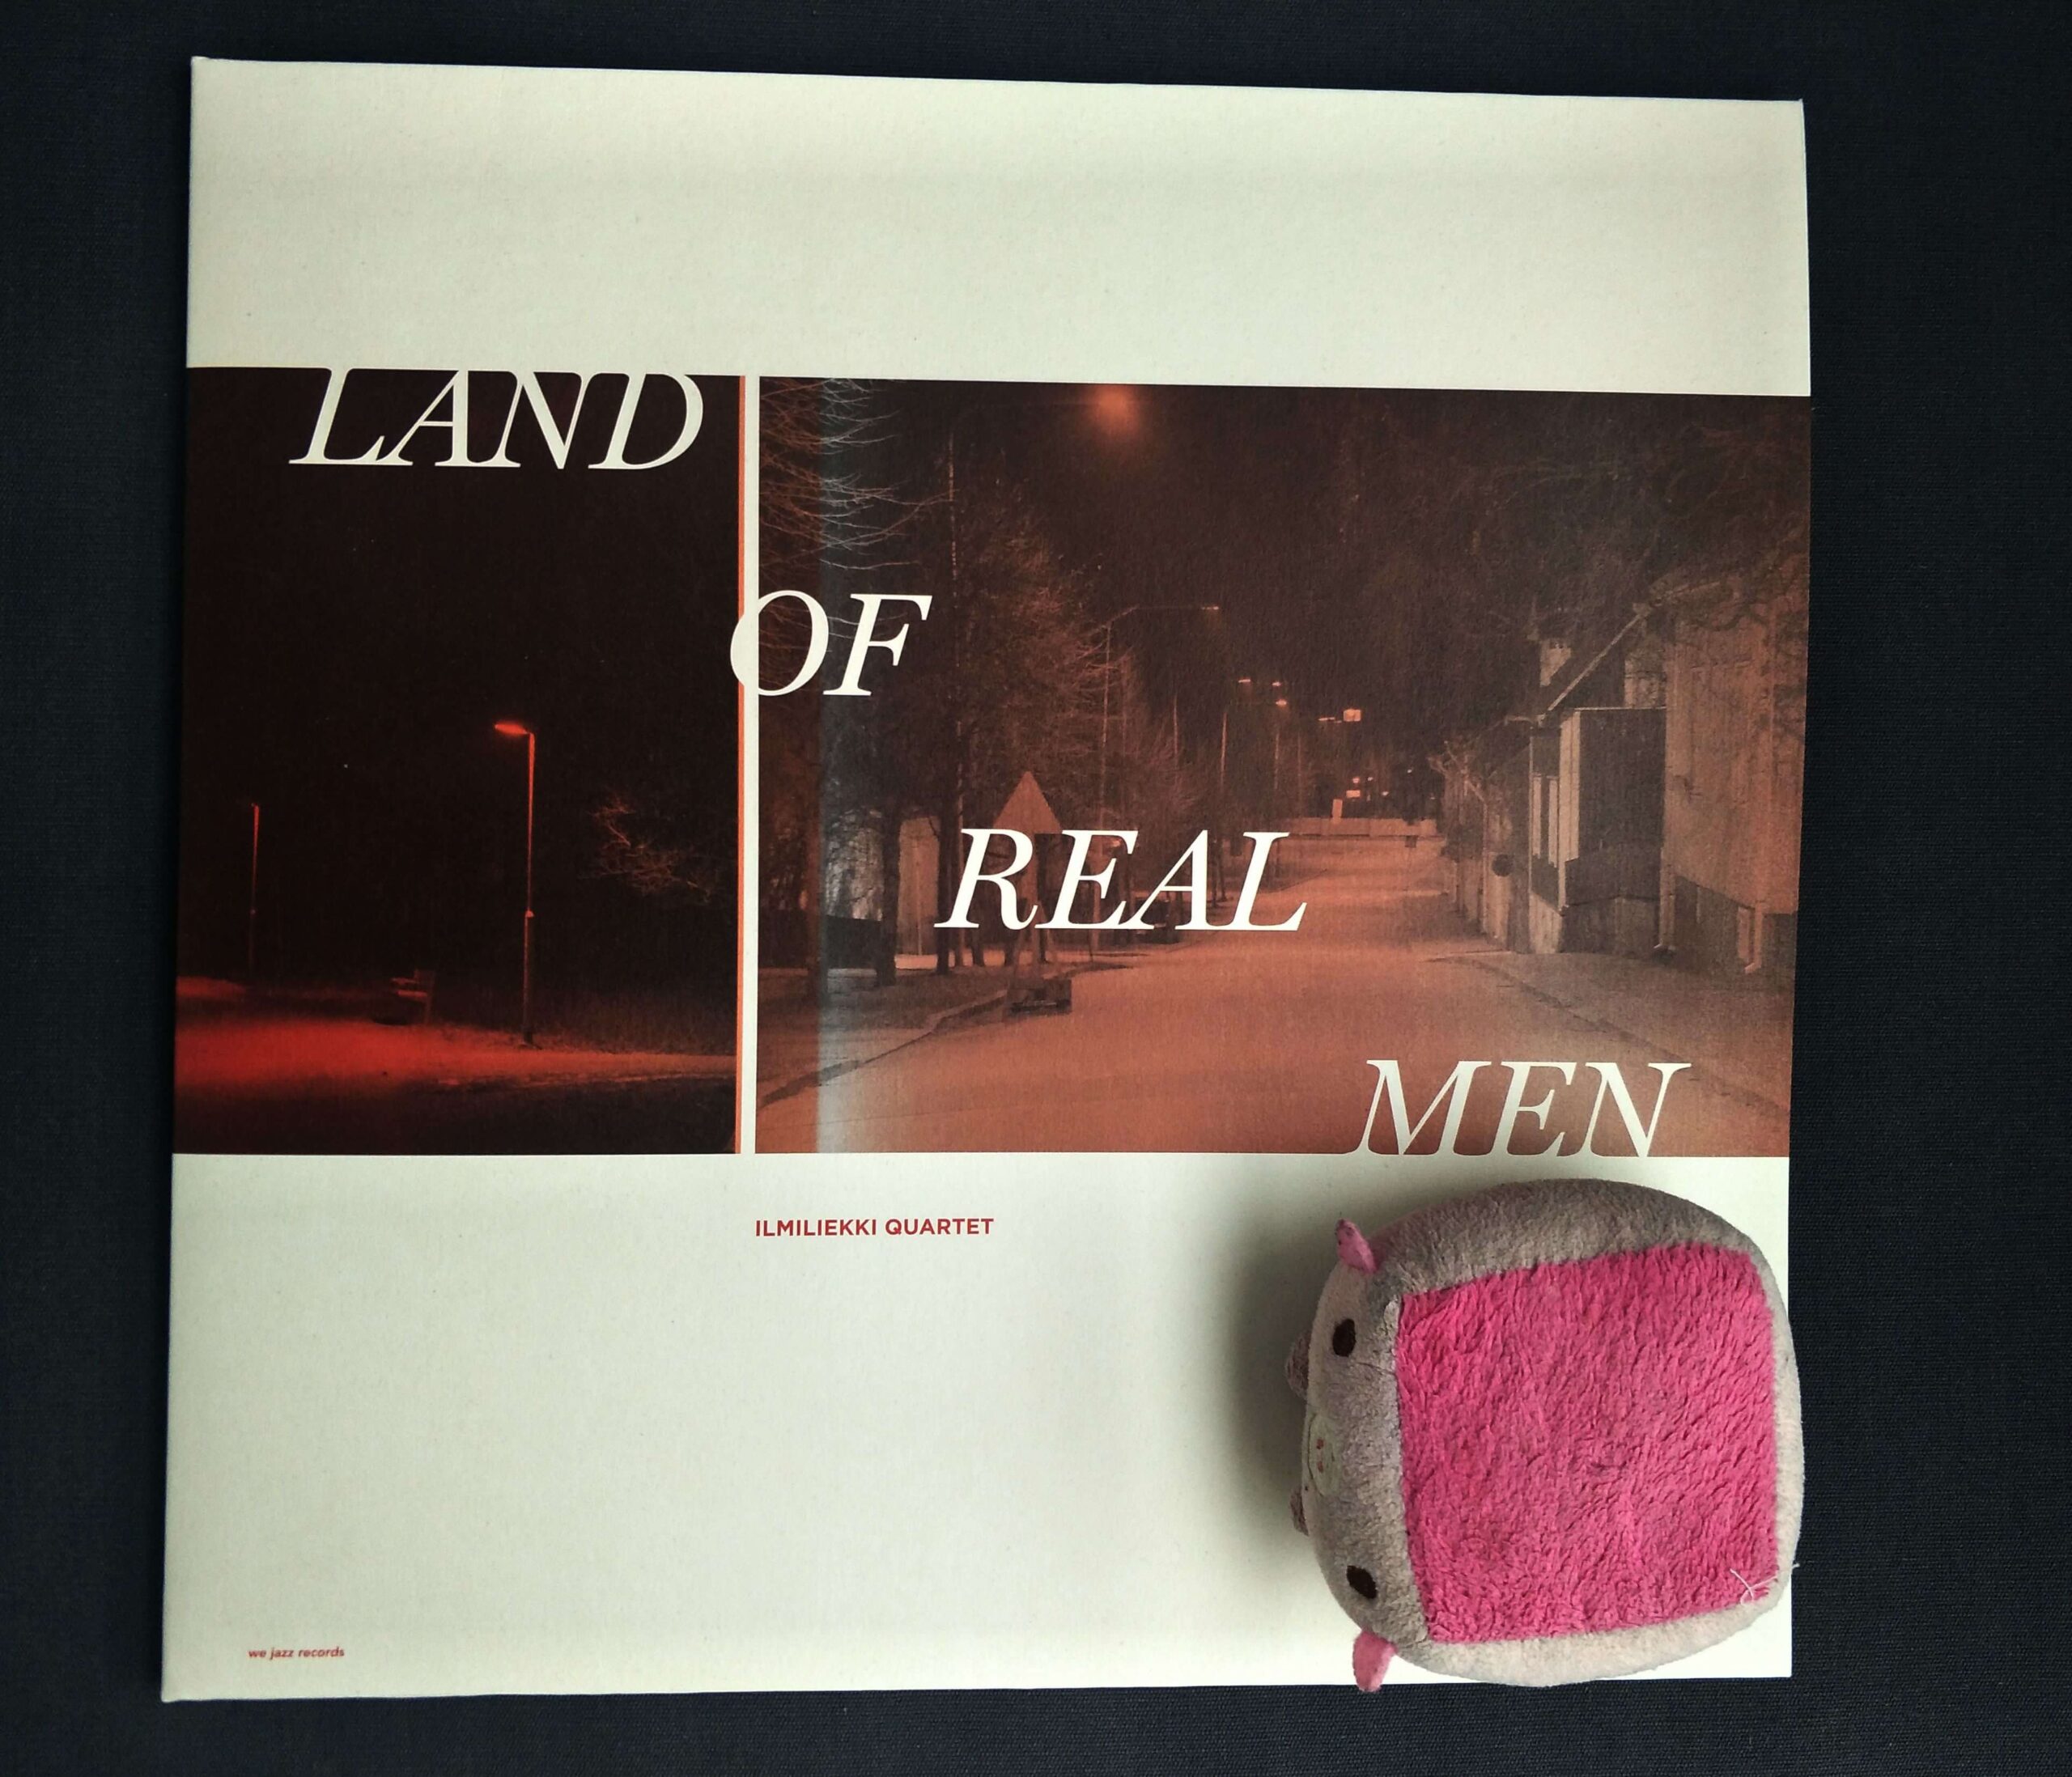 Ilmiliekki Quartet – Land of Real Men